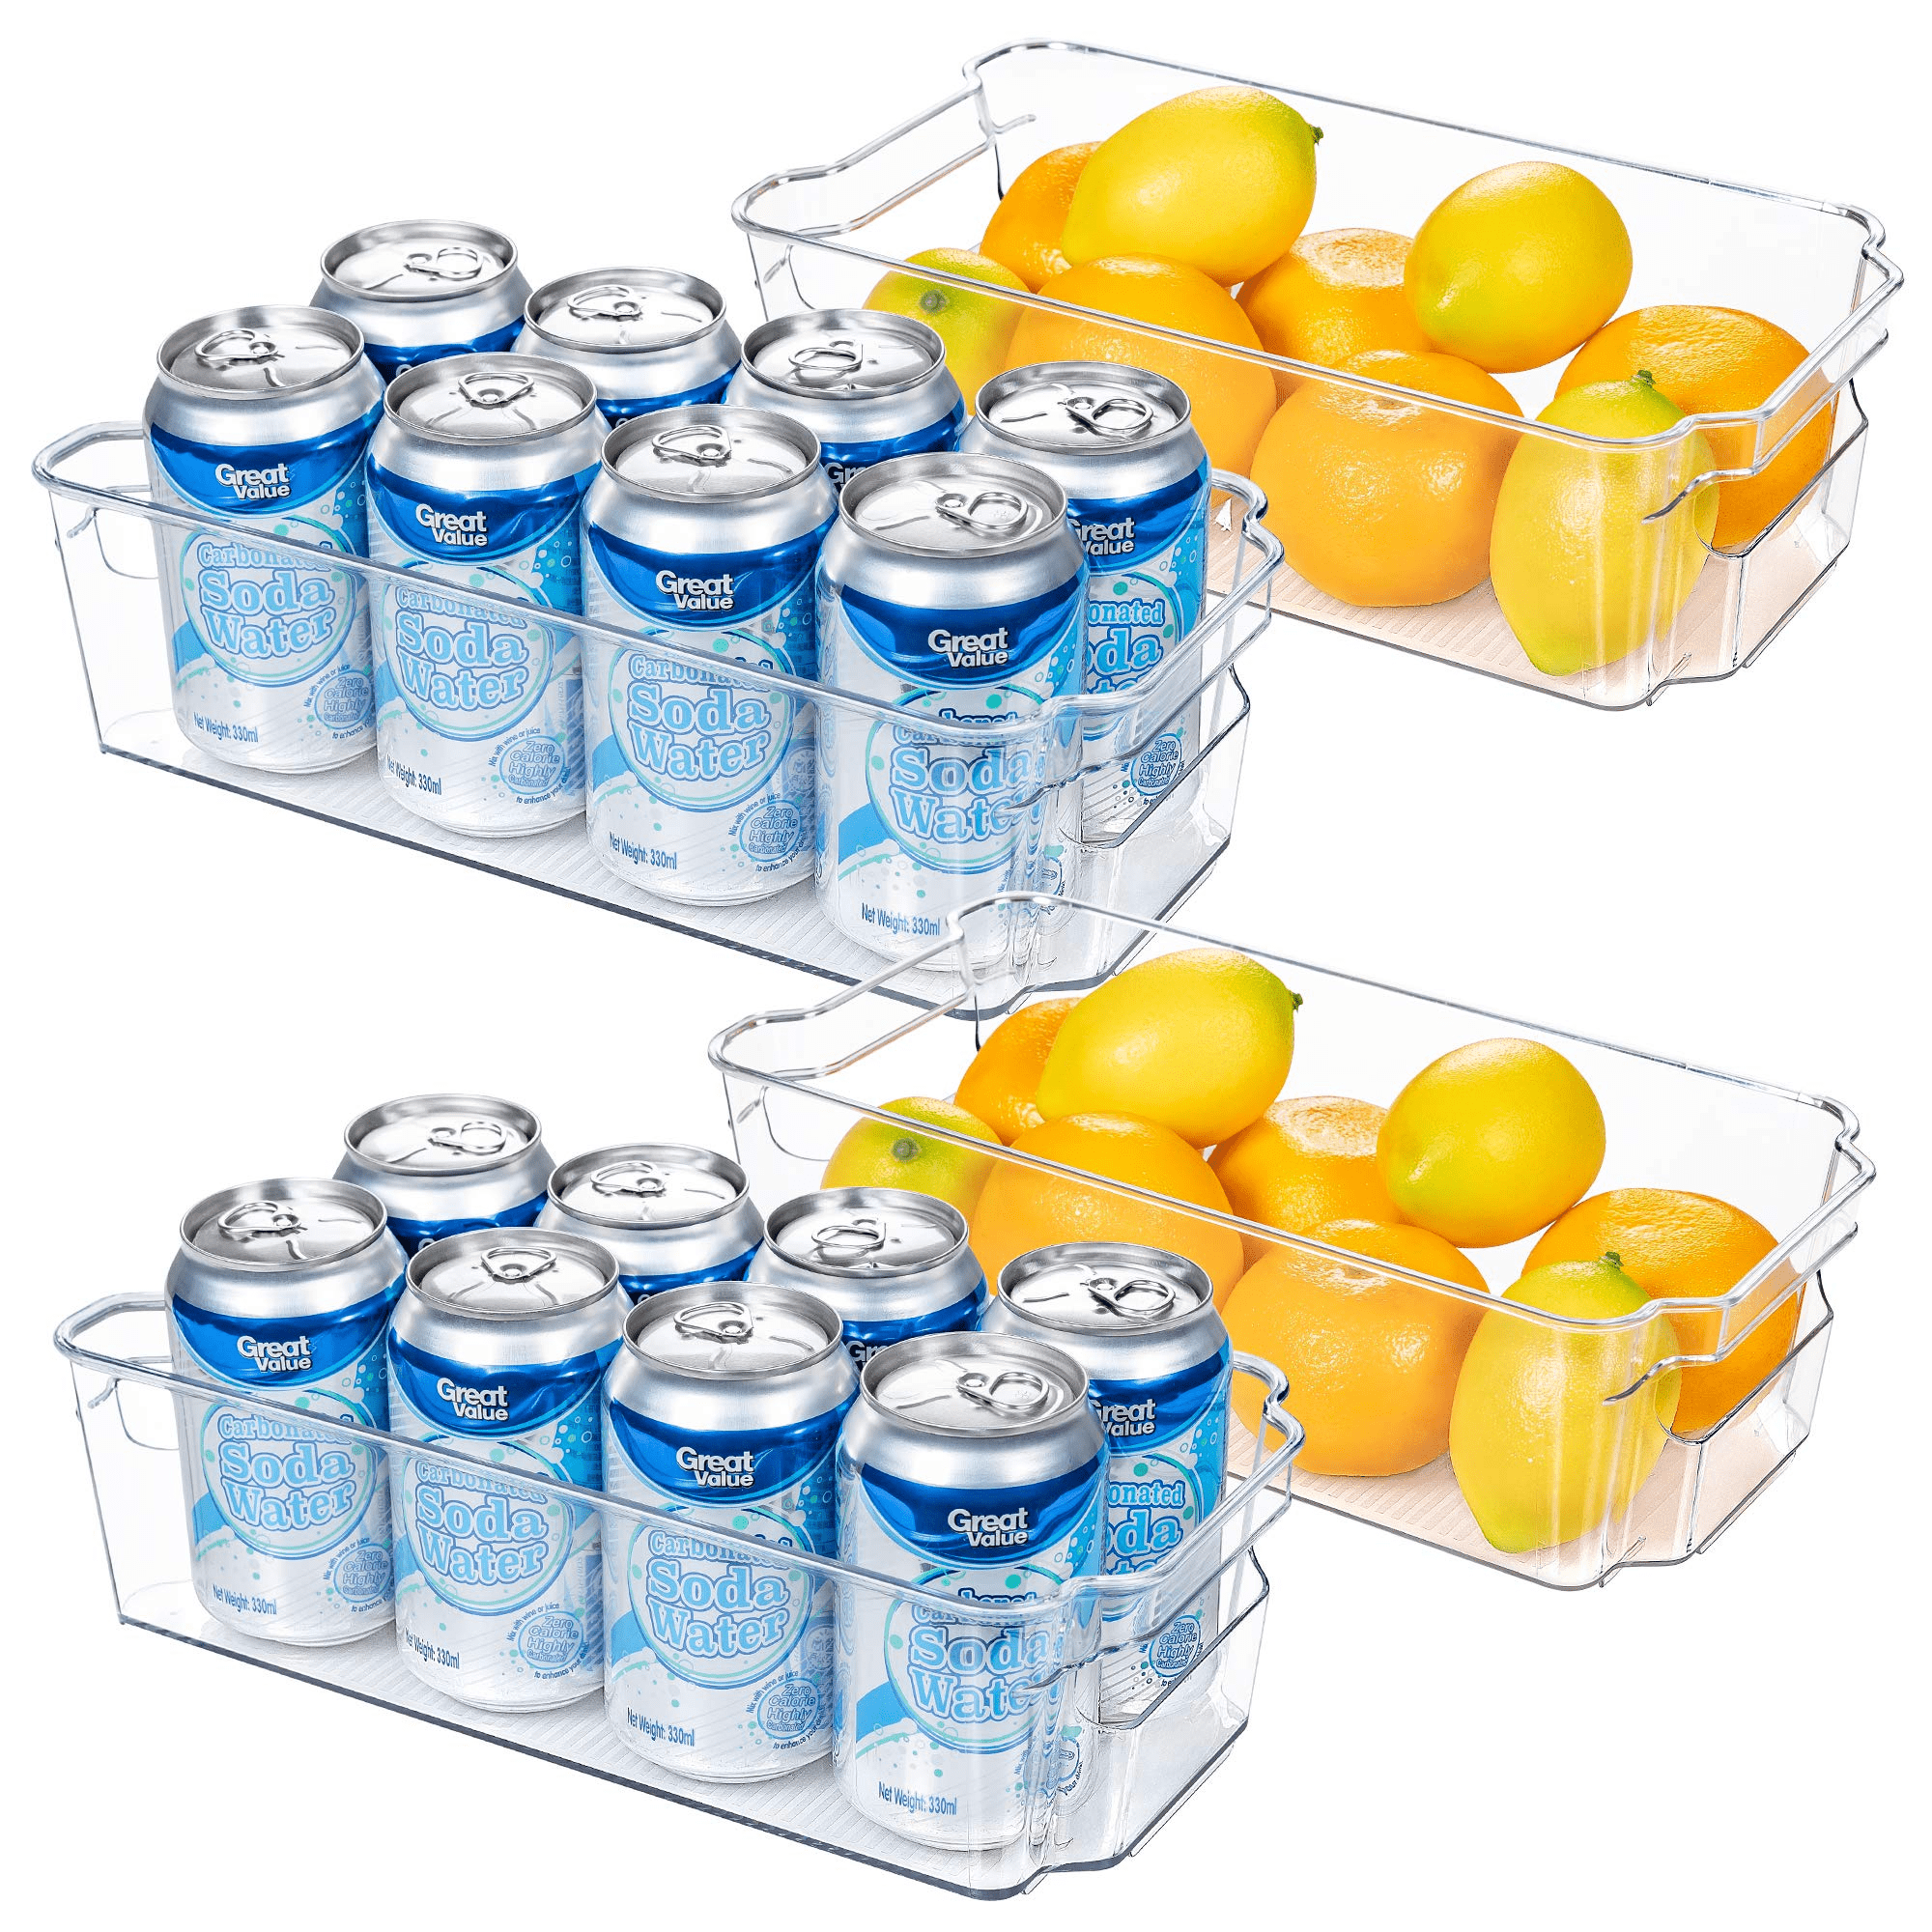 HOOJO Refrigerator Organizer Bins - 2pcs Clear Plastic Bins For Fridge,  Freezer, Kitchen Cabinet, Pantry Organization and Storage, BPA Free Fridge  Organizer, 12.5 Long-Medium